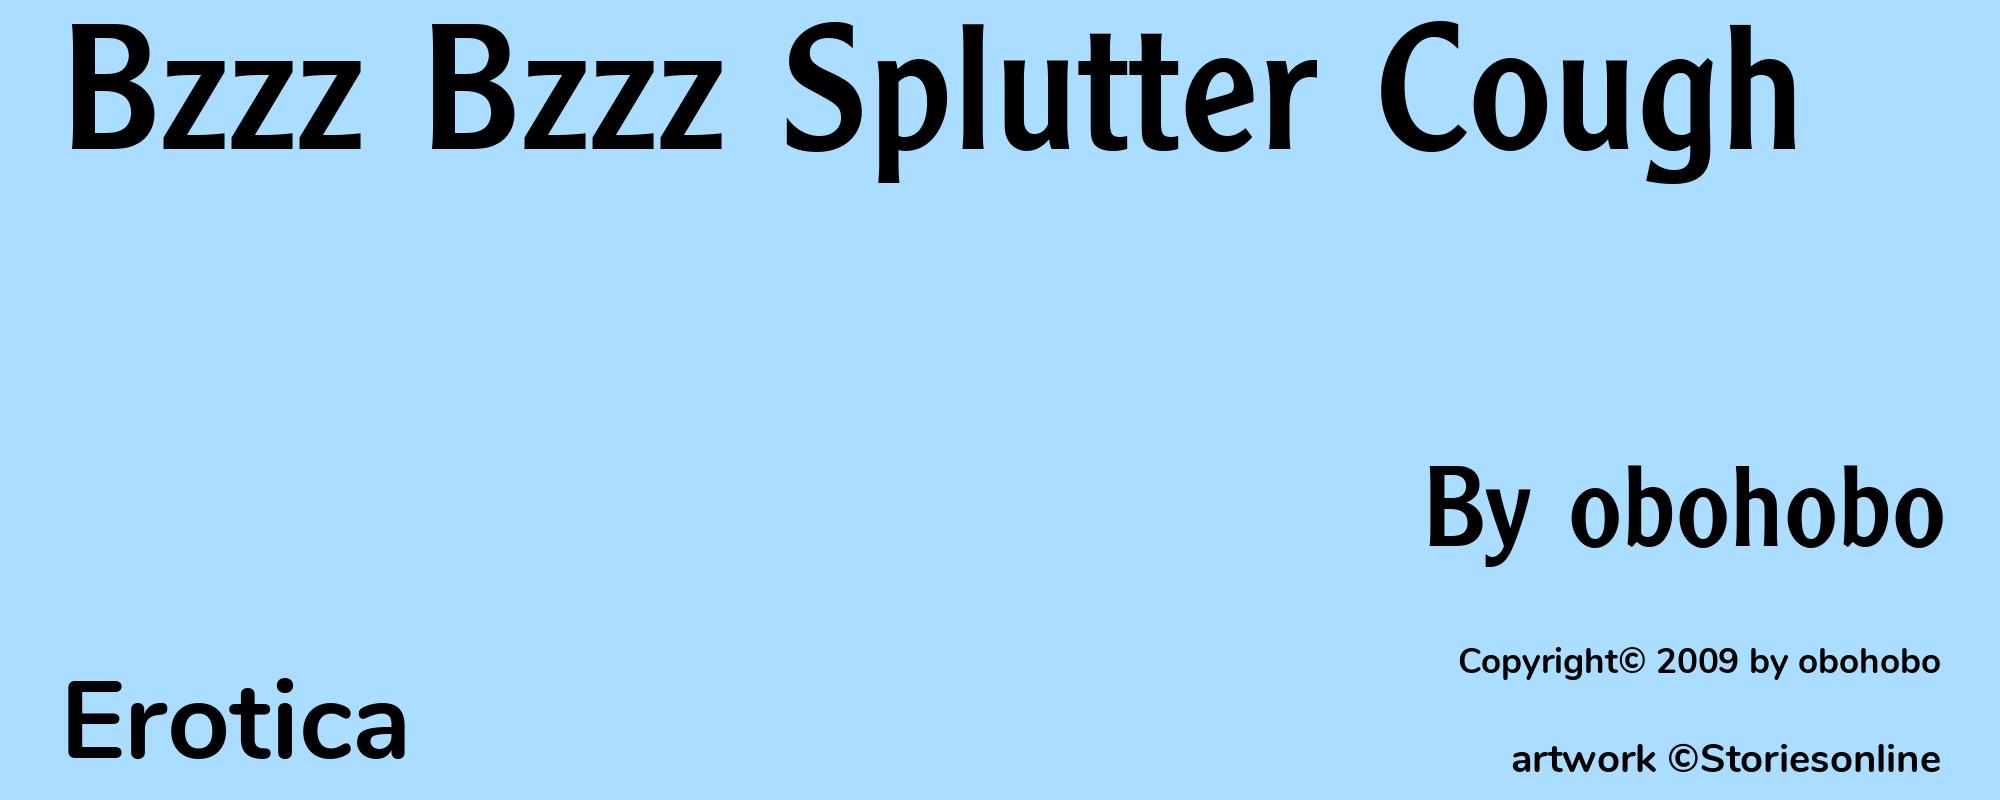 Bzzz Bzzz Splutter Cough - Cover